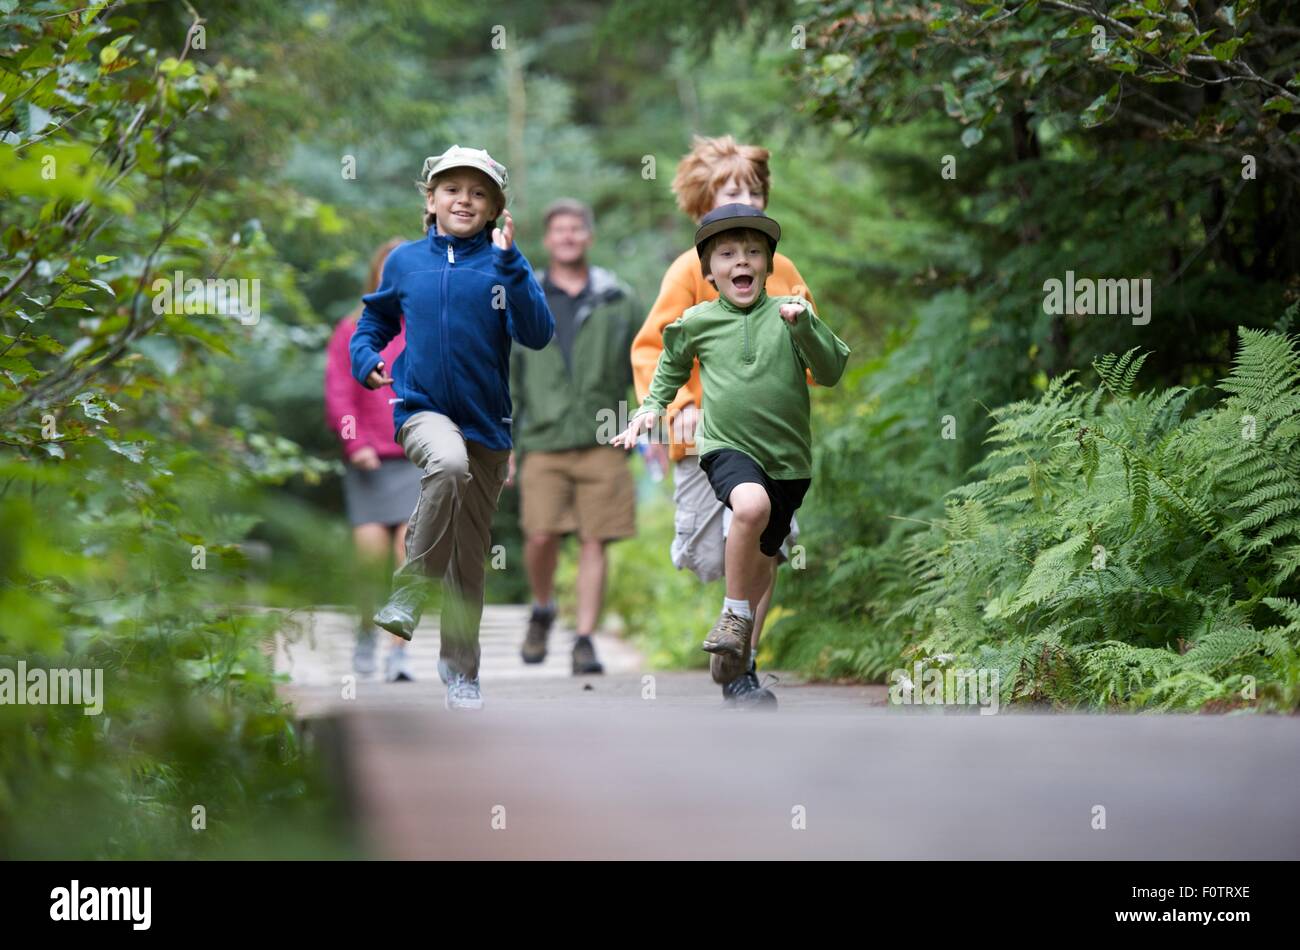 Family exploring woods, Winner Creek, Alyeska Resort, Turnagain Arm, Mt. Alyeska, Girdwood, Alaska, USA Stock Photo